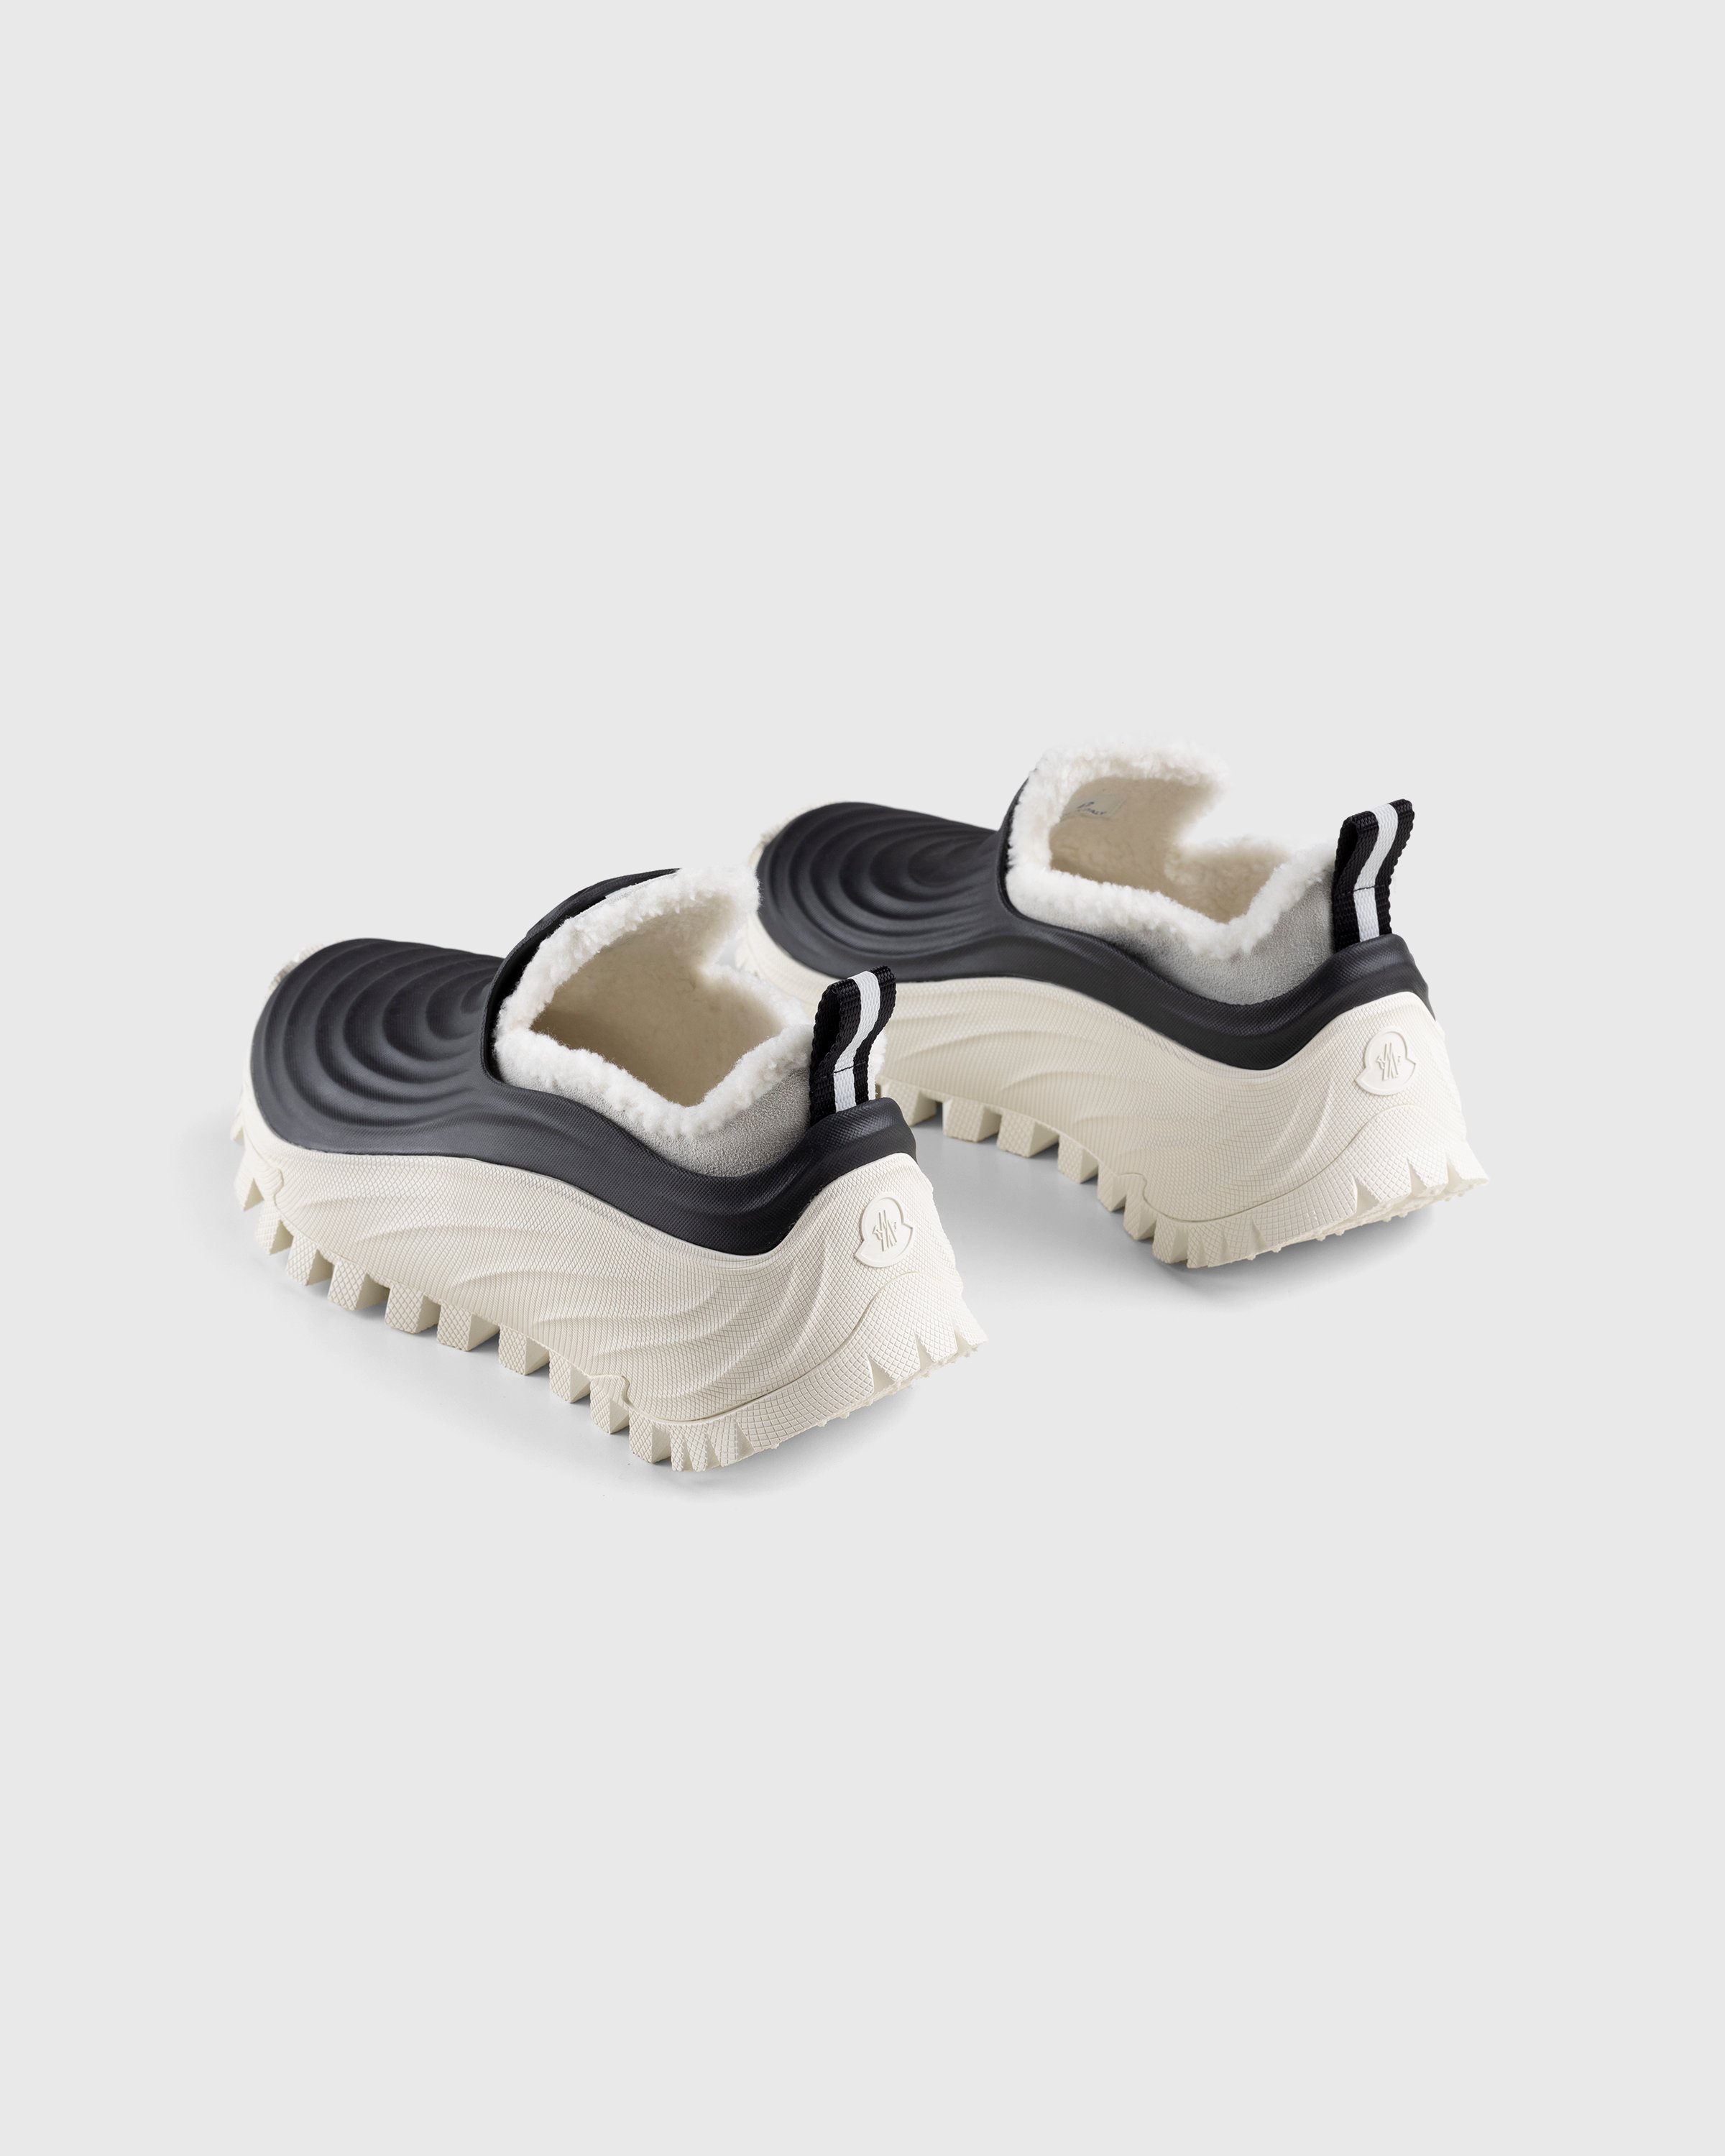 Moncler - Aqua Rain Boots Black/White - Footwear - Grey - Image 4